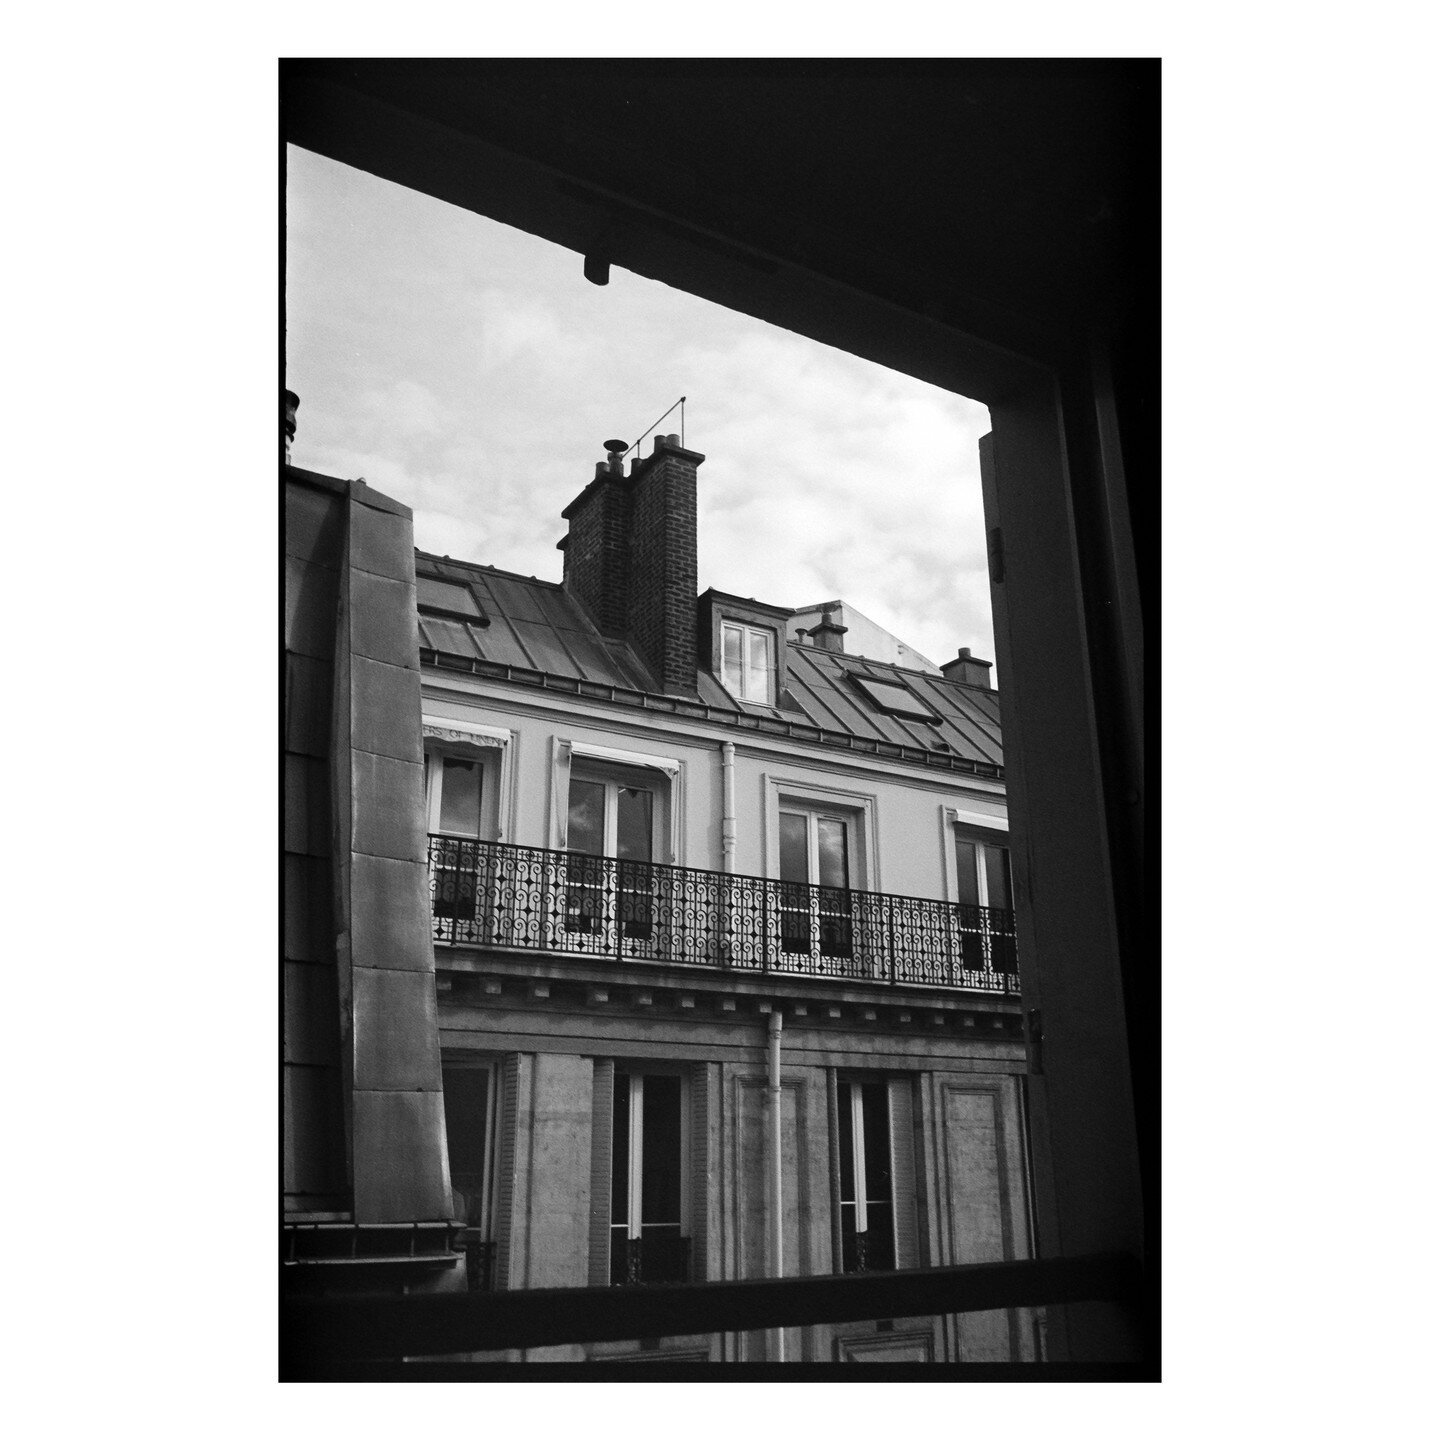 I Miss That Old Parisian Apartment

#NikonF2 #washiD #washifilm #pushedfilm #sublimestreet #streetsgrammer #street_avengers #streethunters #eyeshotmag #streets_storytelling #lensculturestreets #thestreetphotographyhub #supersweetstreet #capturestreet